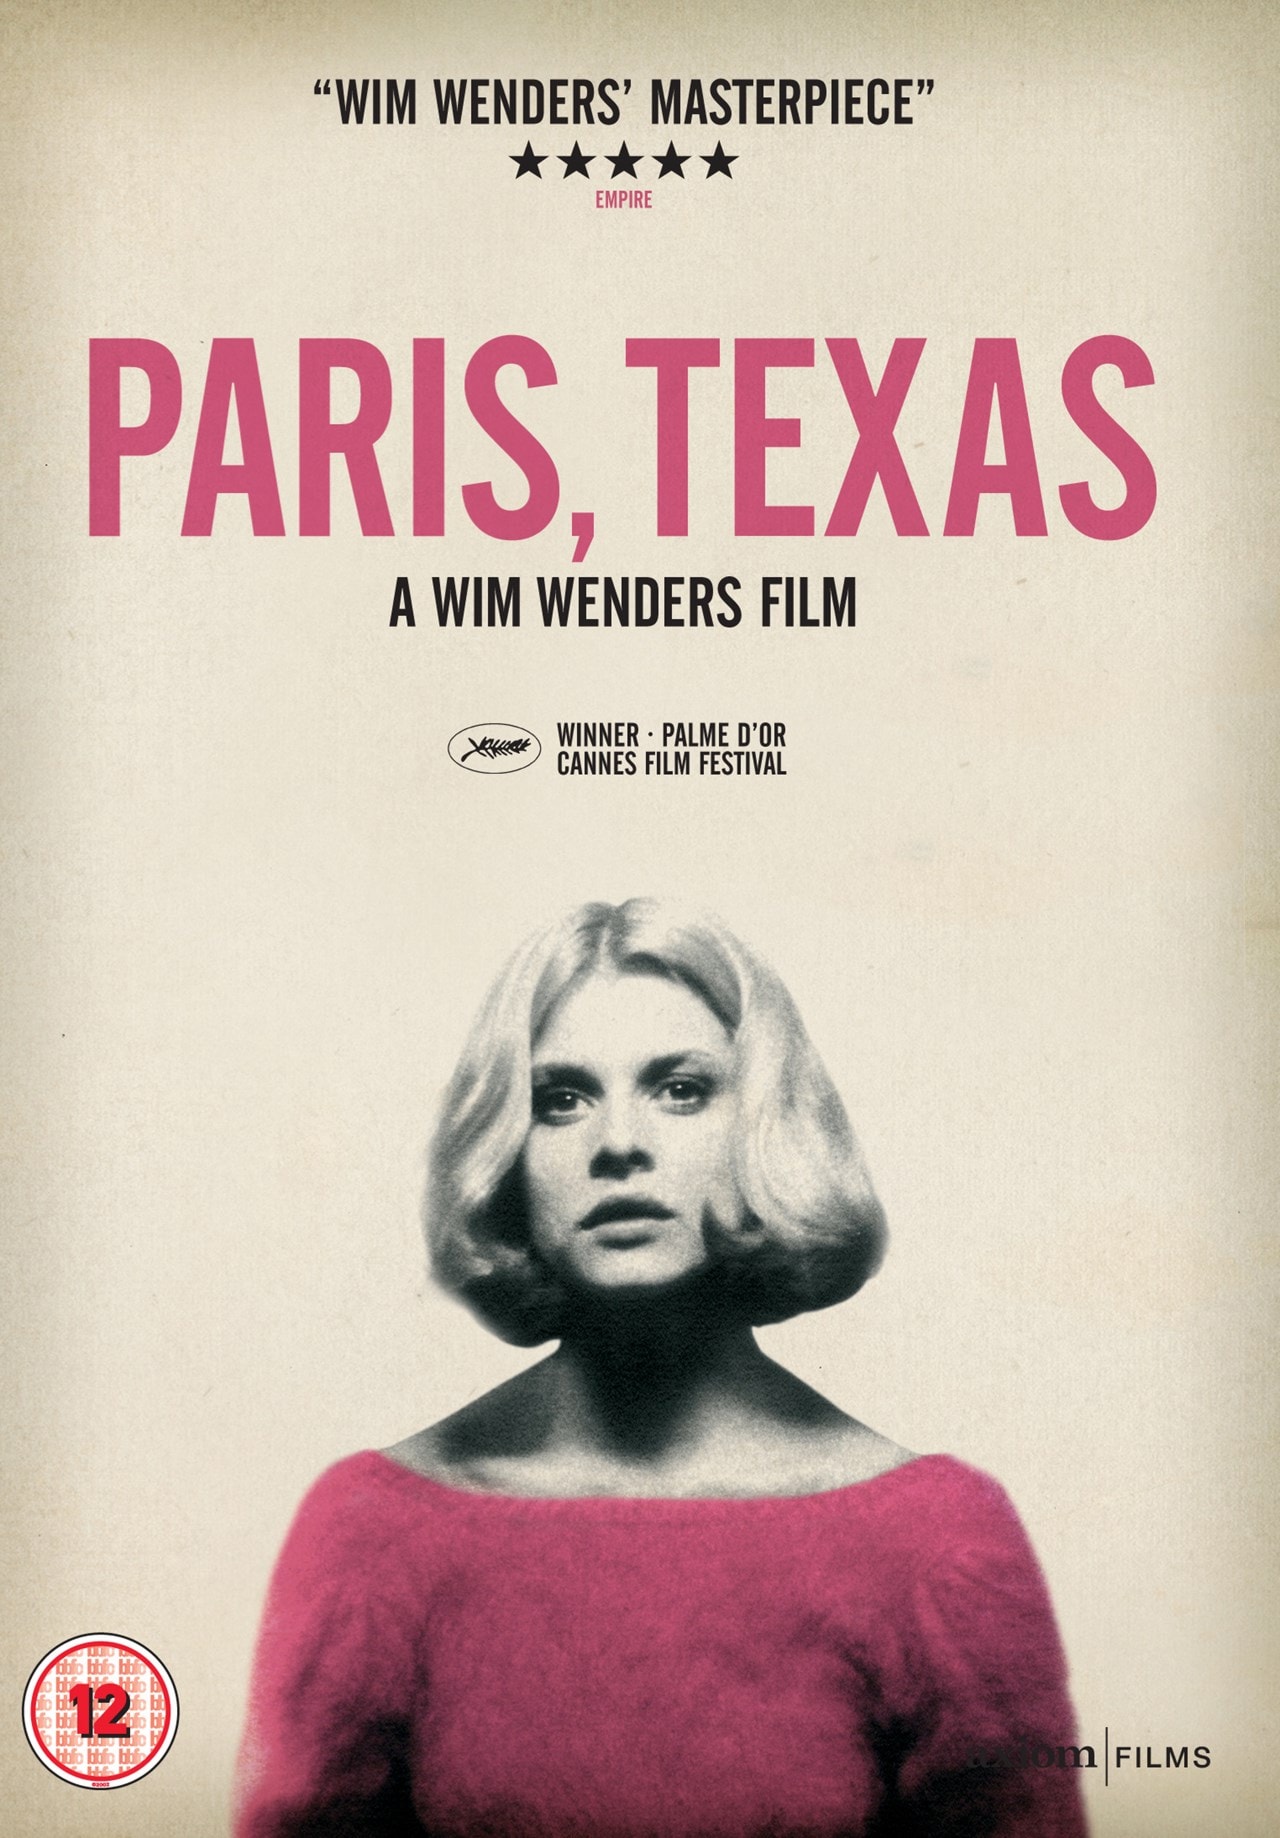 Paris, Texas | DVD | Free shipping over £20 | HMV Store